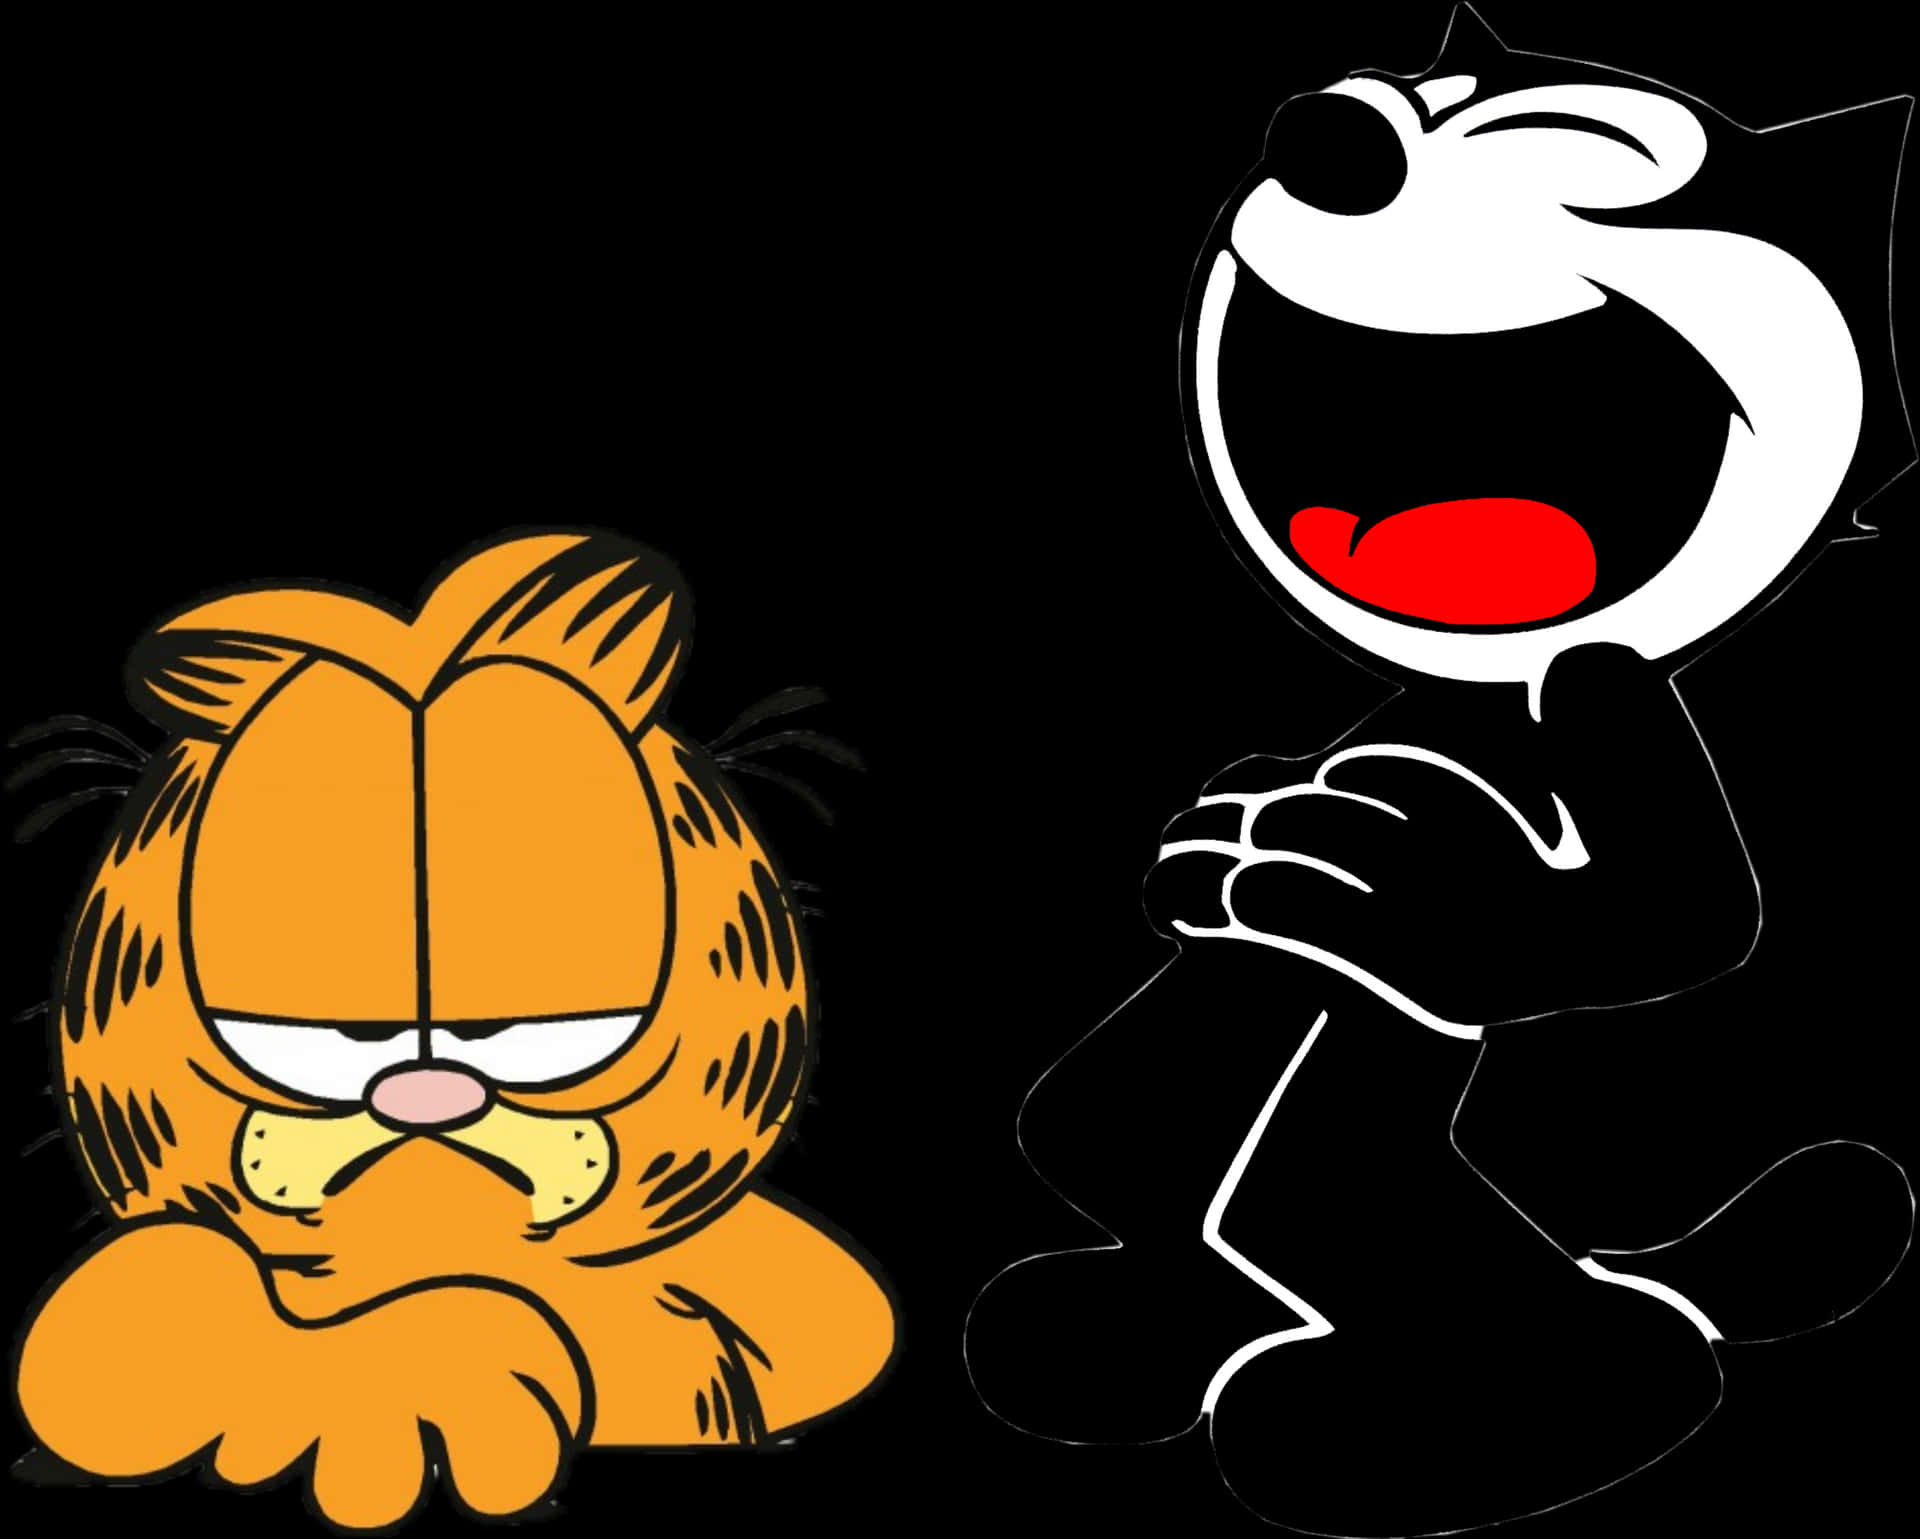 Grumpy Orange Catand Laughing Black Cat PNG image